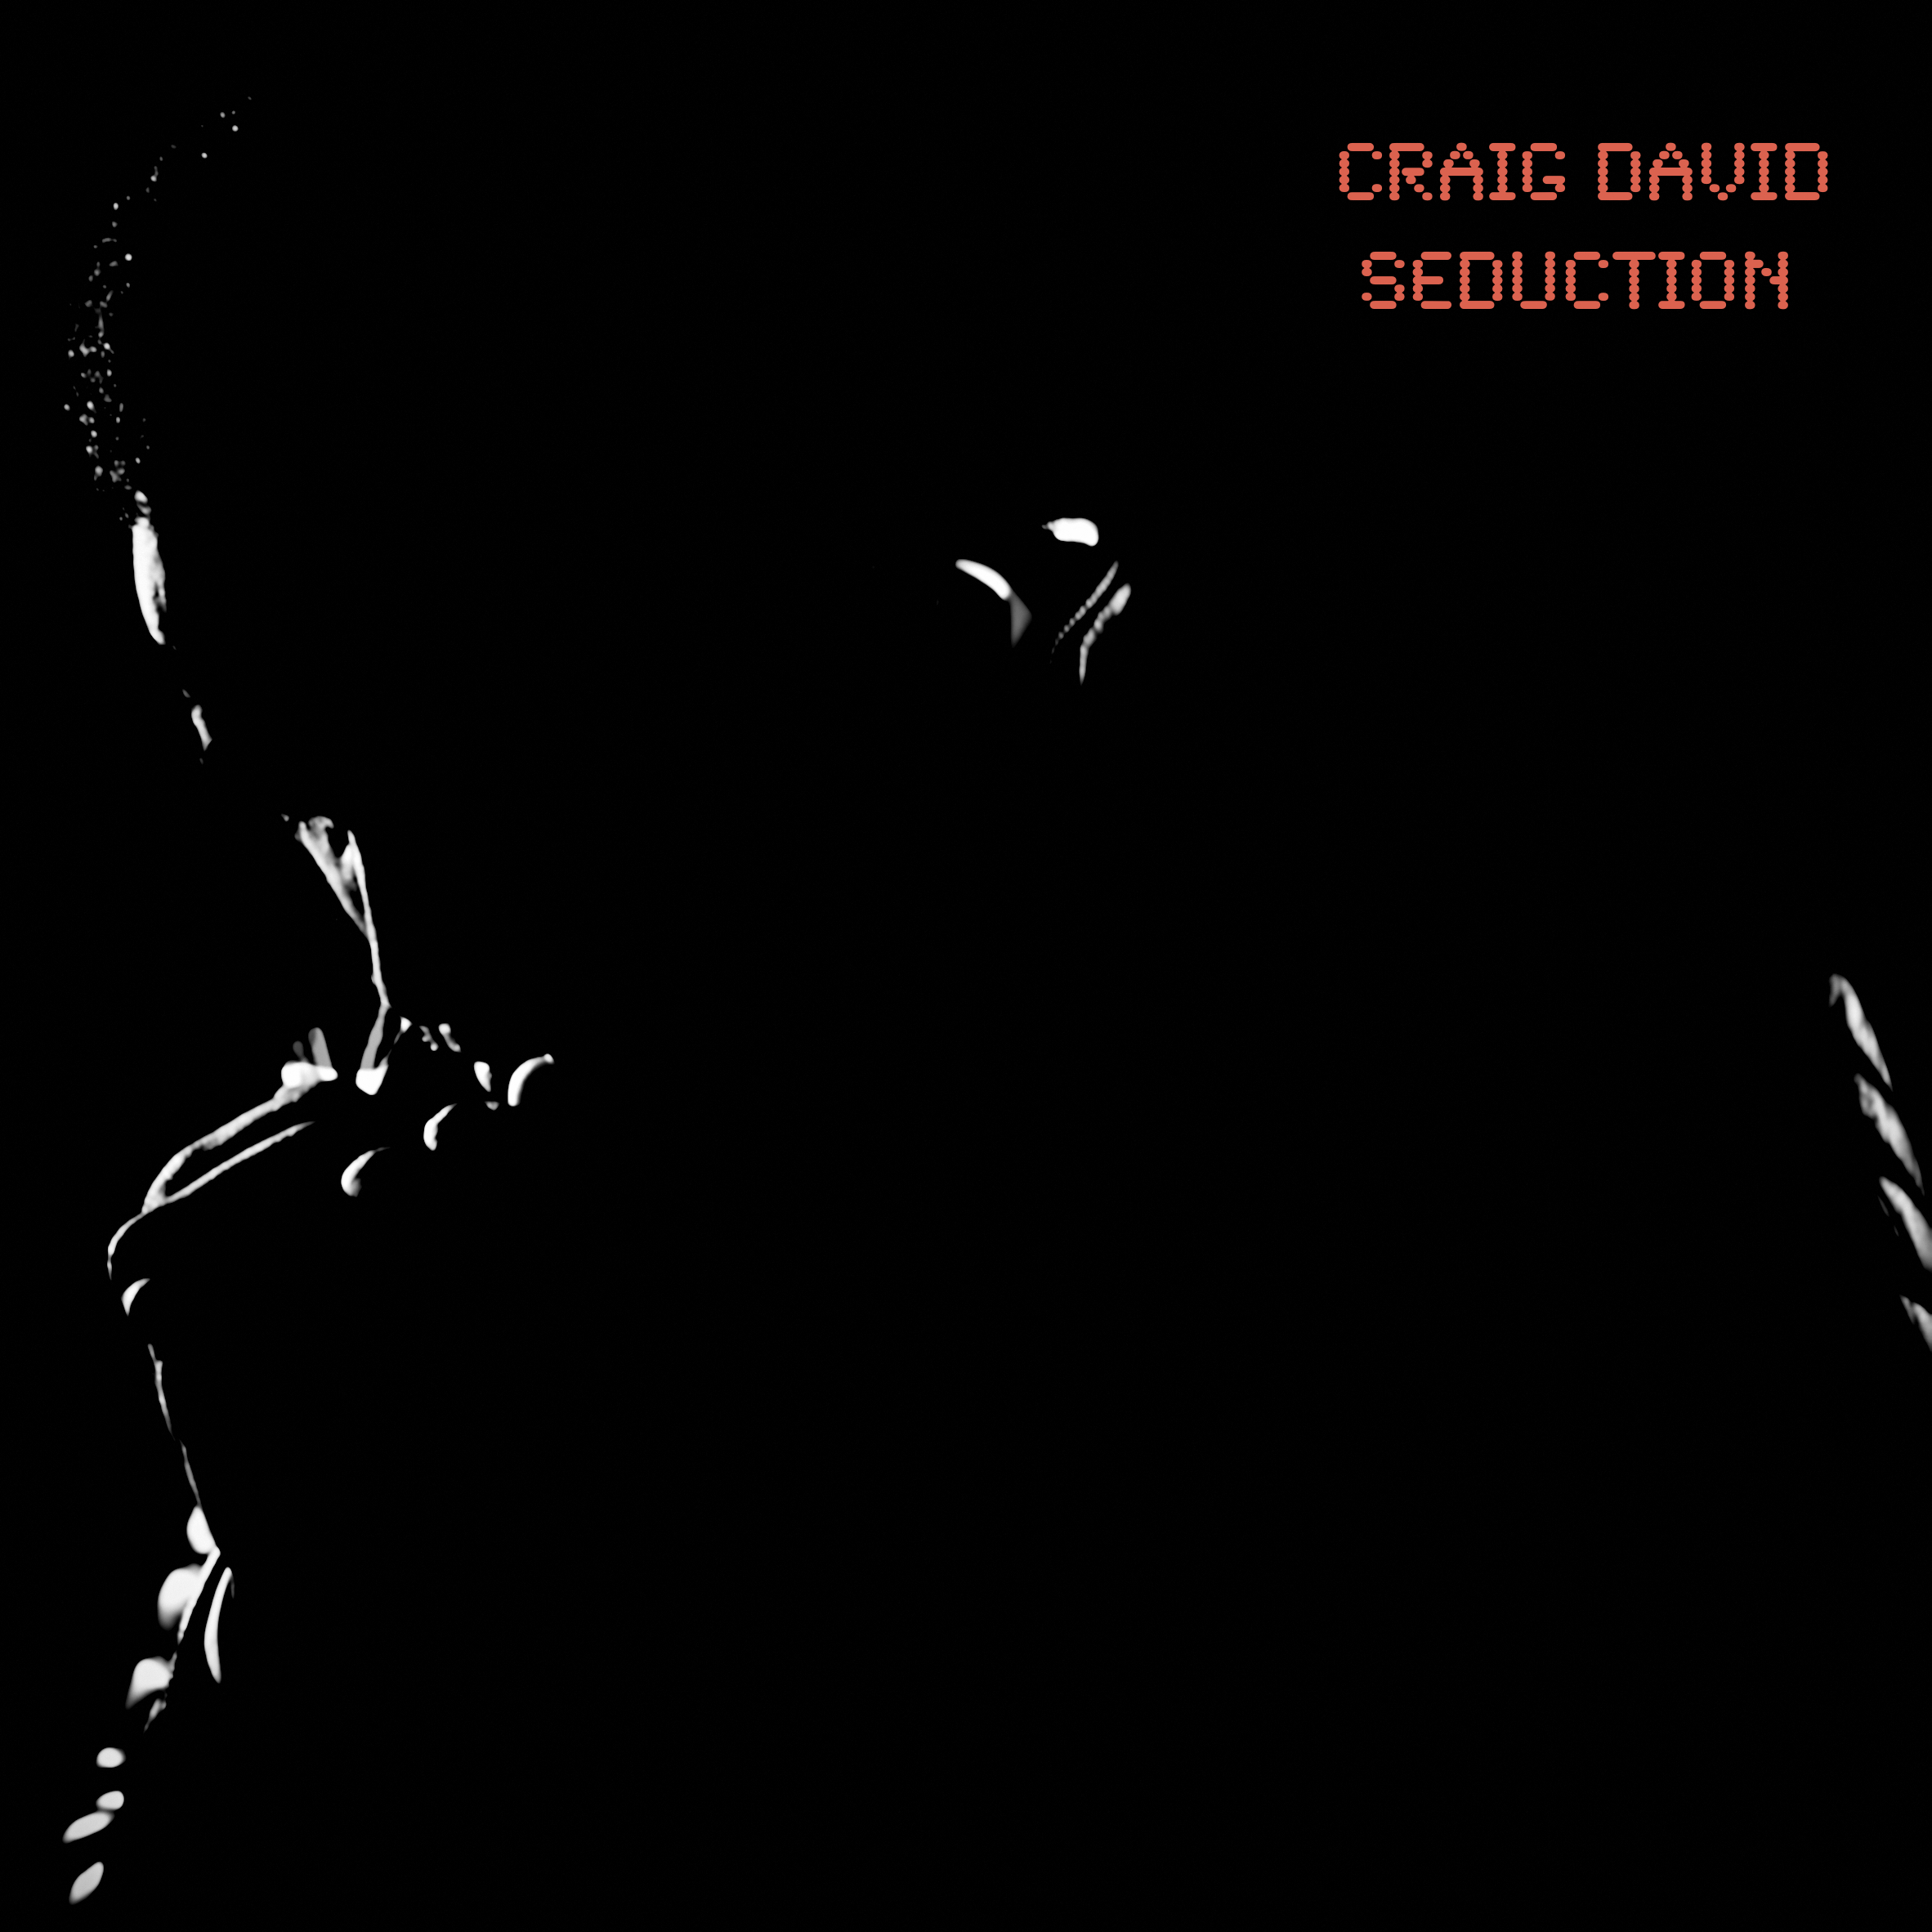 Craig David Seduction